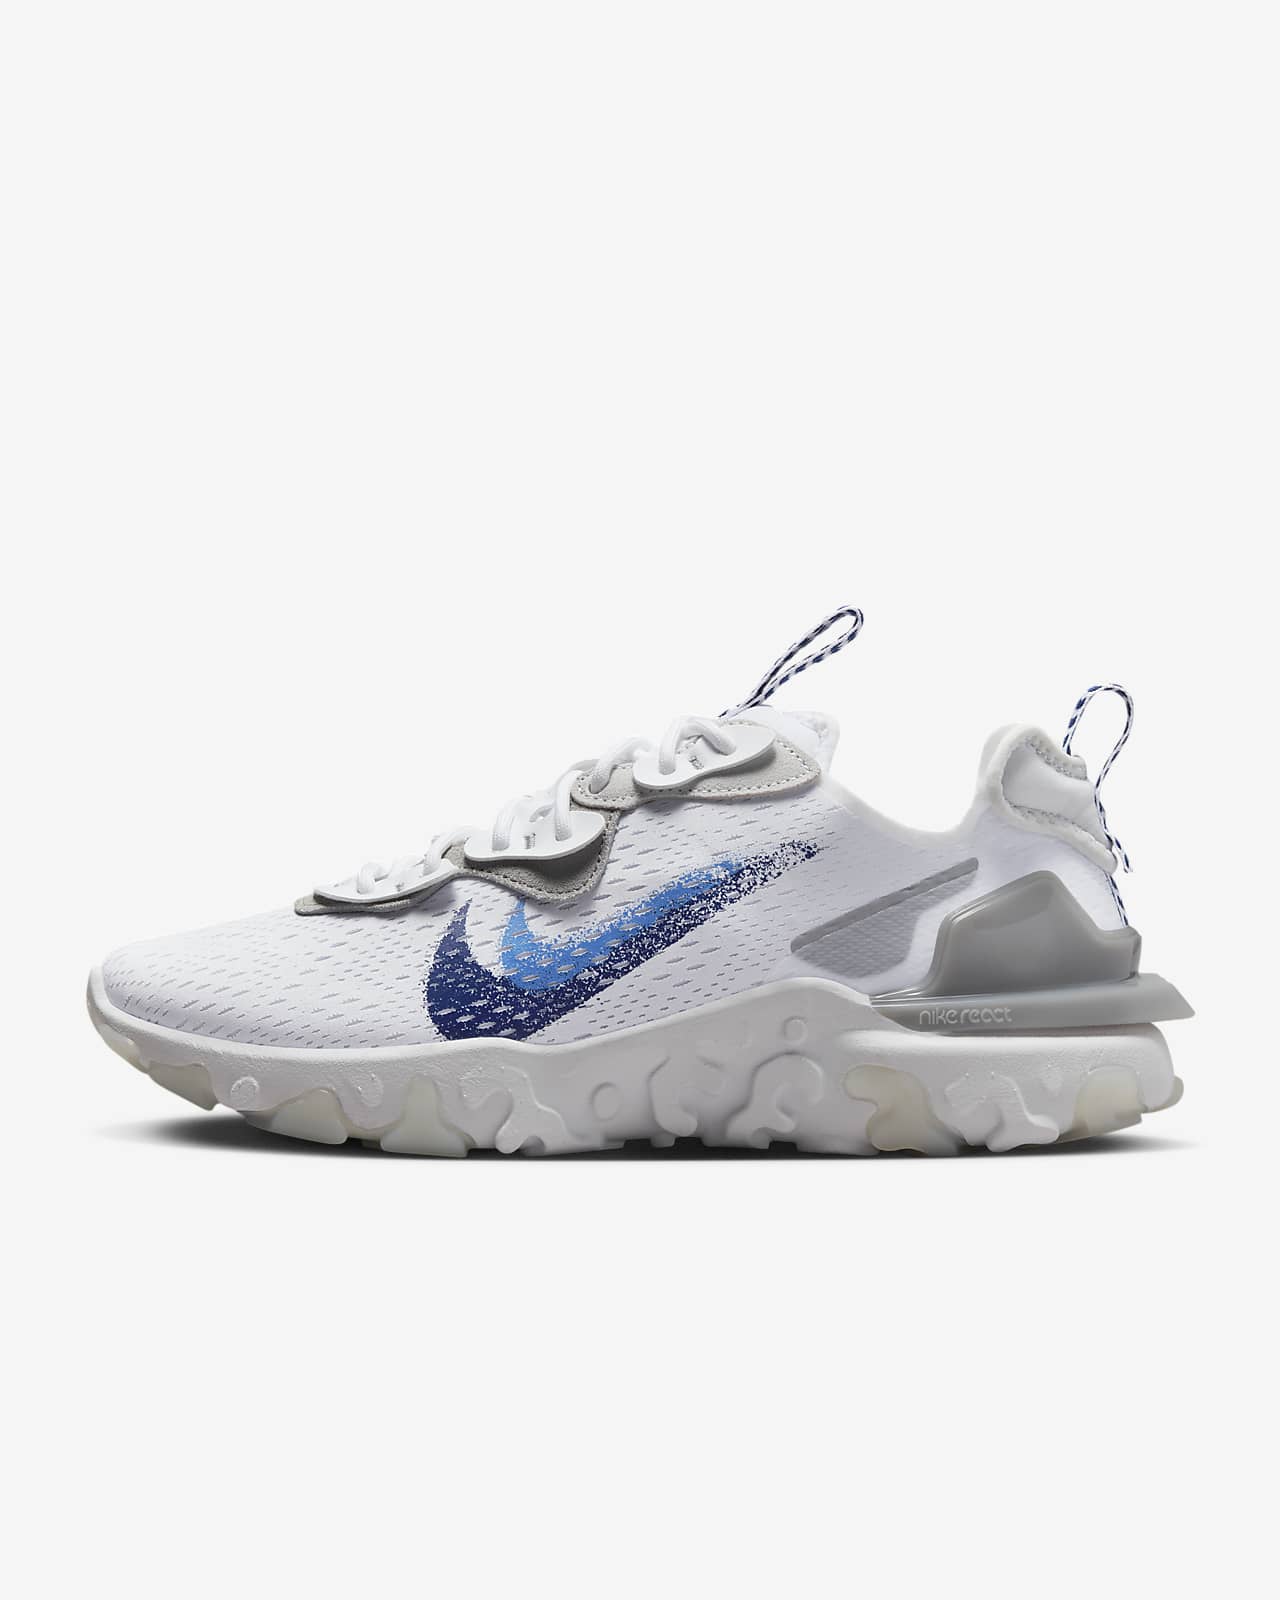 Nike React Vision 'Photo Blue' Shoes - Size 10.5